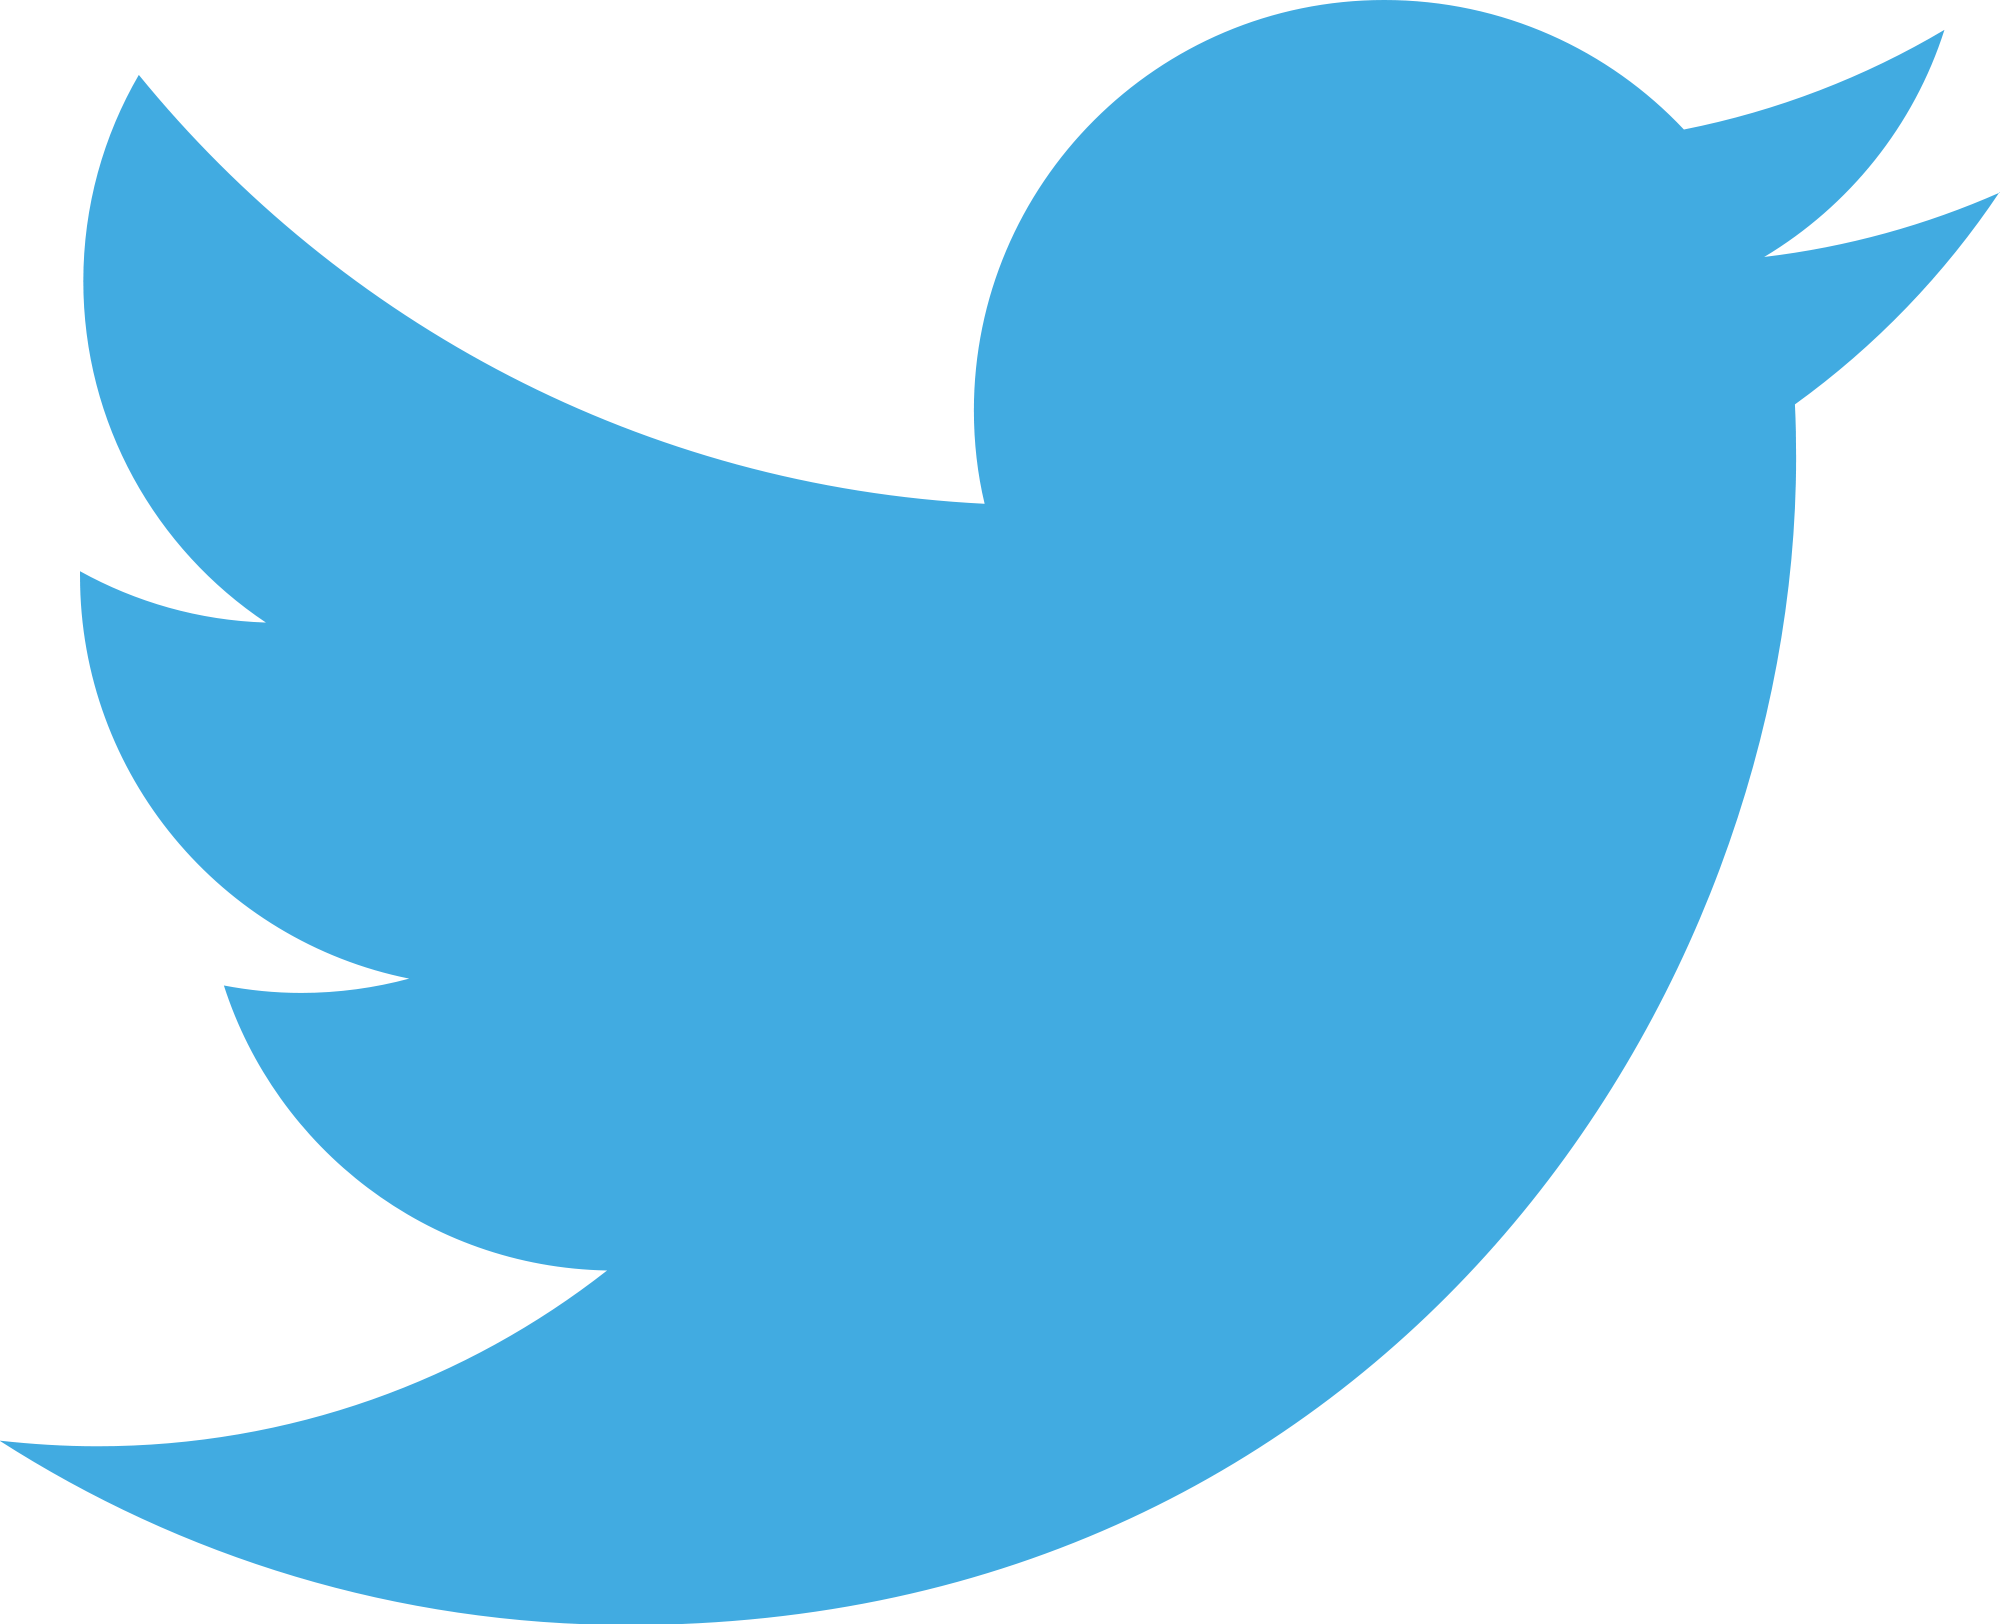 ????:Twitter bird logo 2012.png - Wikipedia